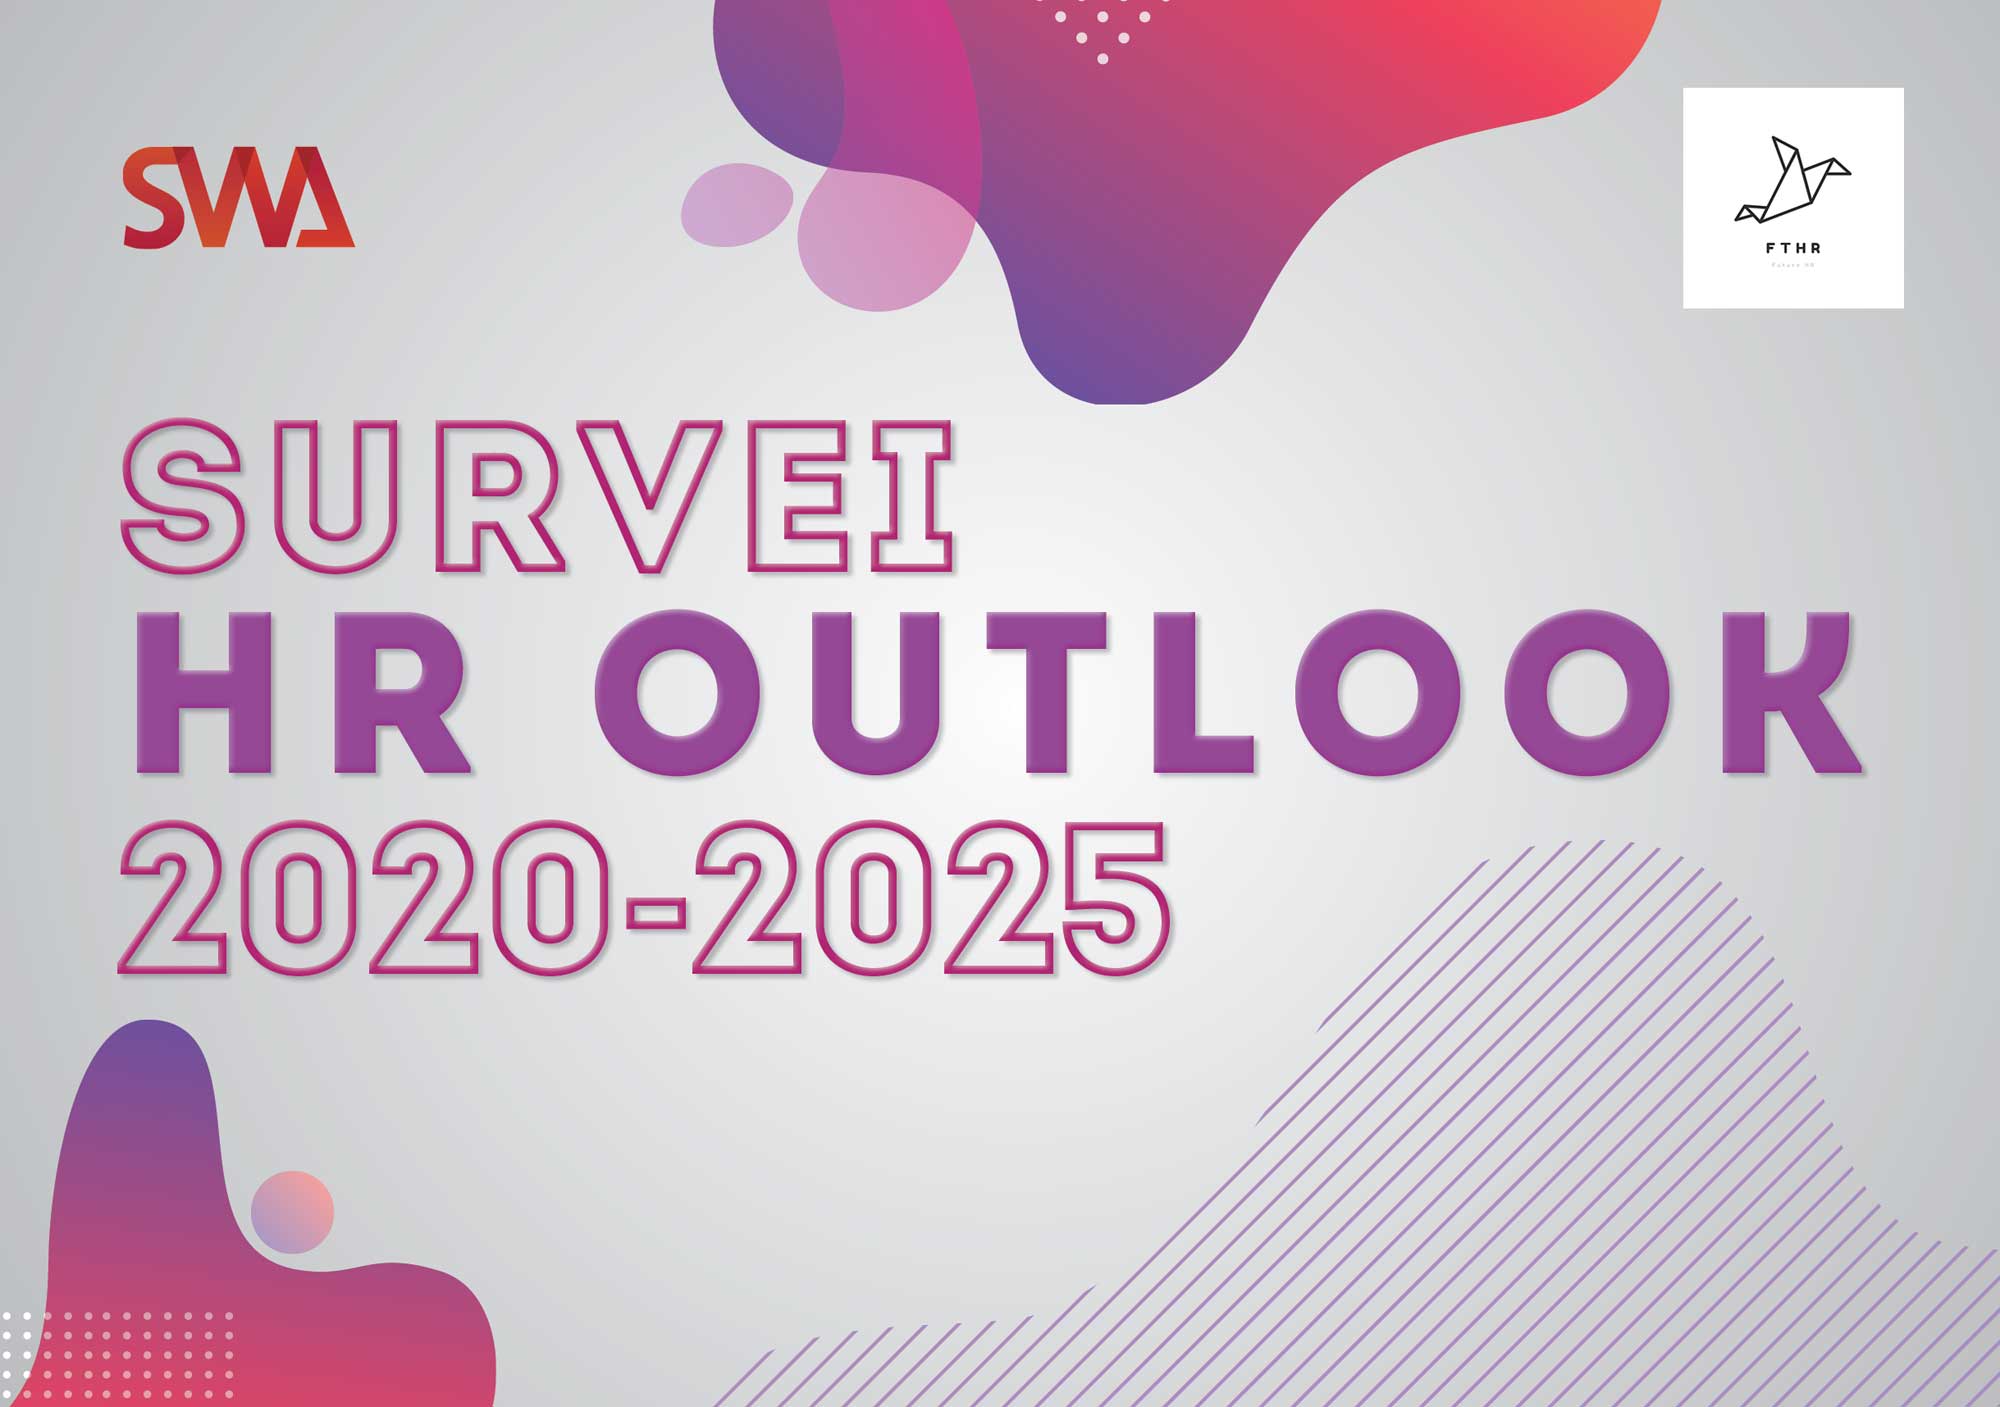 Survei HR OUTLOOK 2020-2025